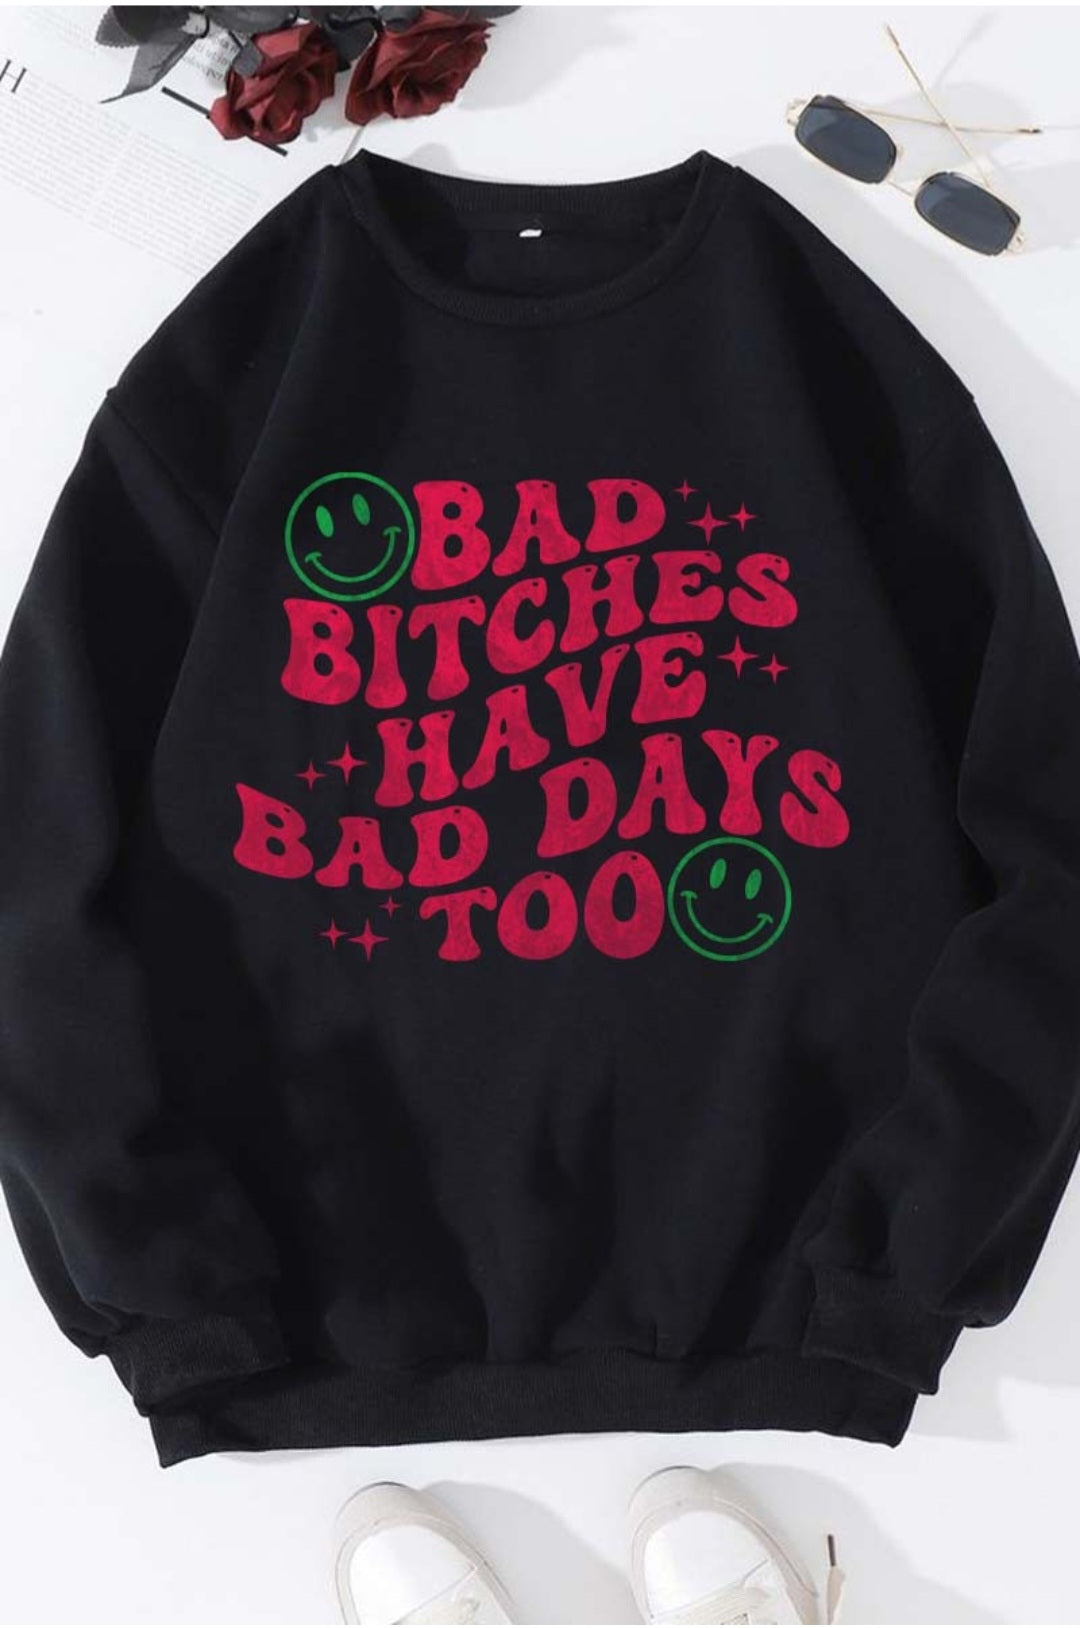 "Bad B*tche$ have Bad Days too" Unisex Sweatshirt